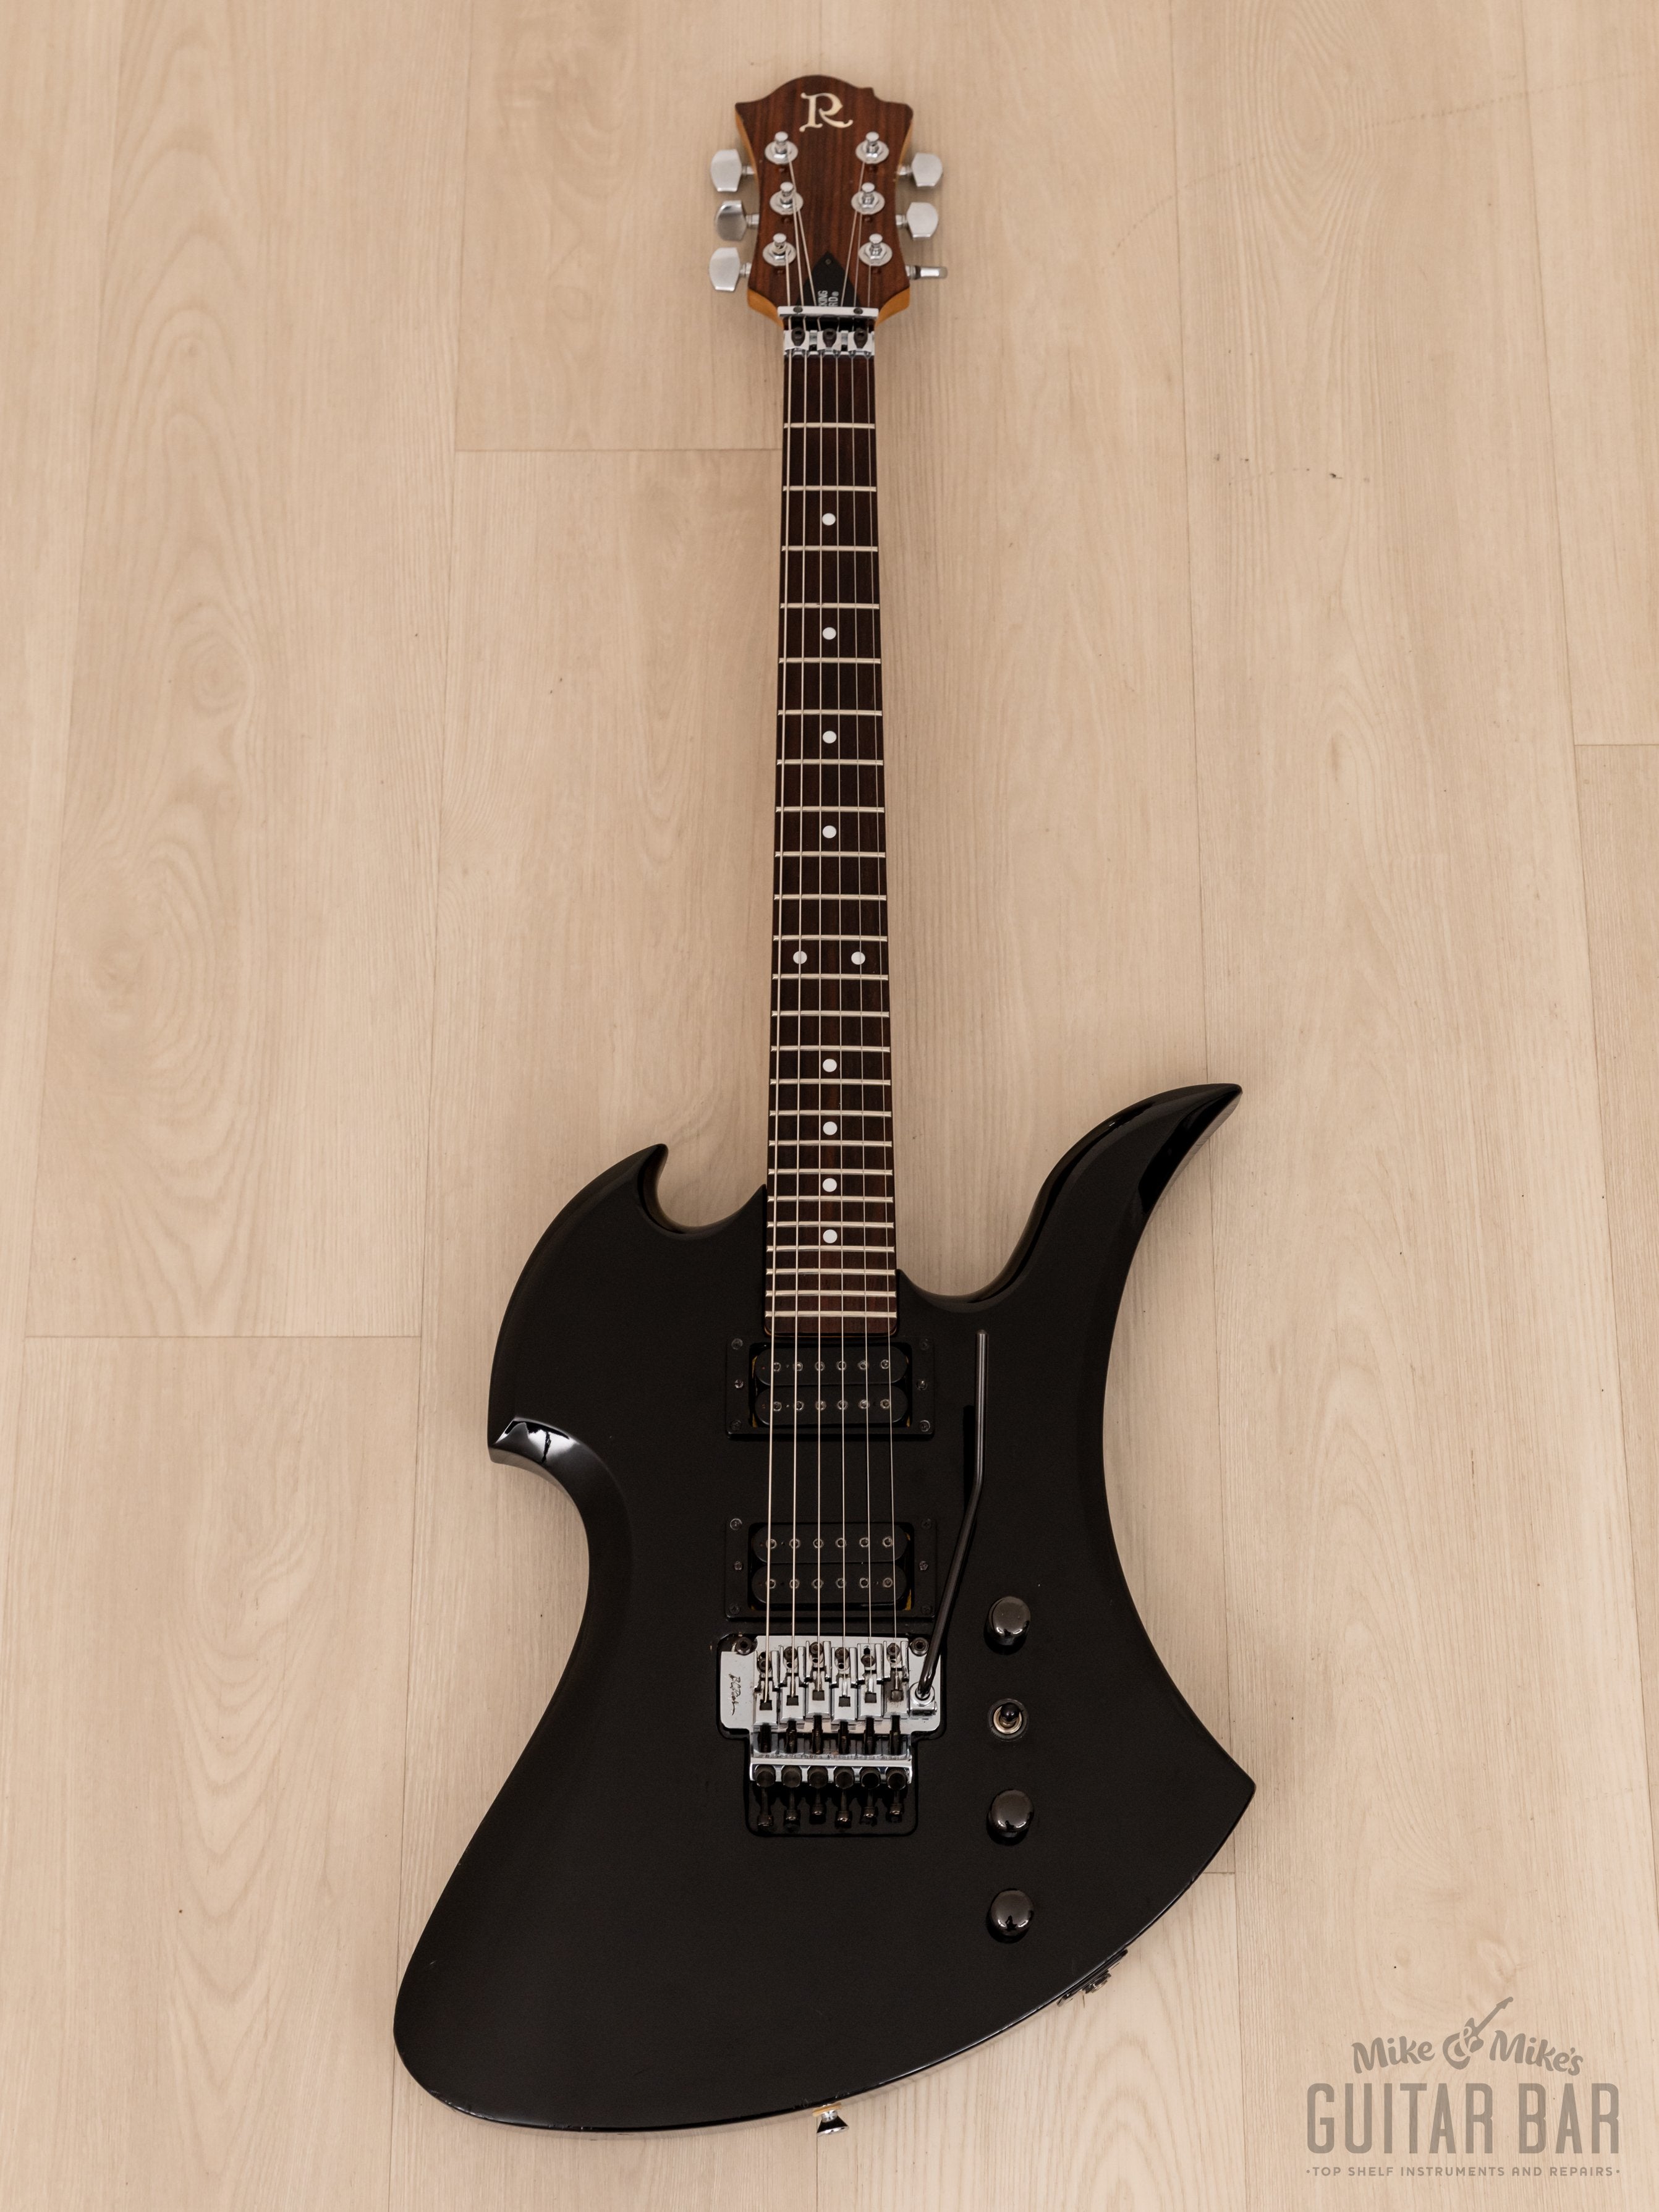 1989 BC Rich Mockingbird NJ Series MG-801 Vintage Electric Guitar Black, Japan